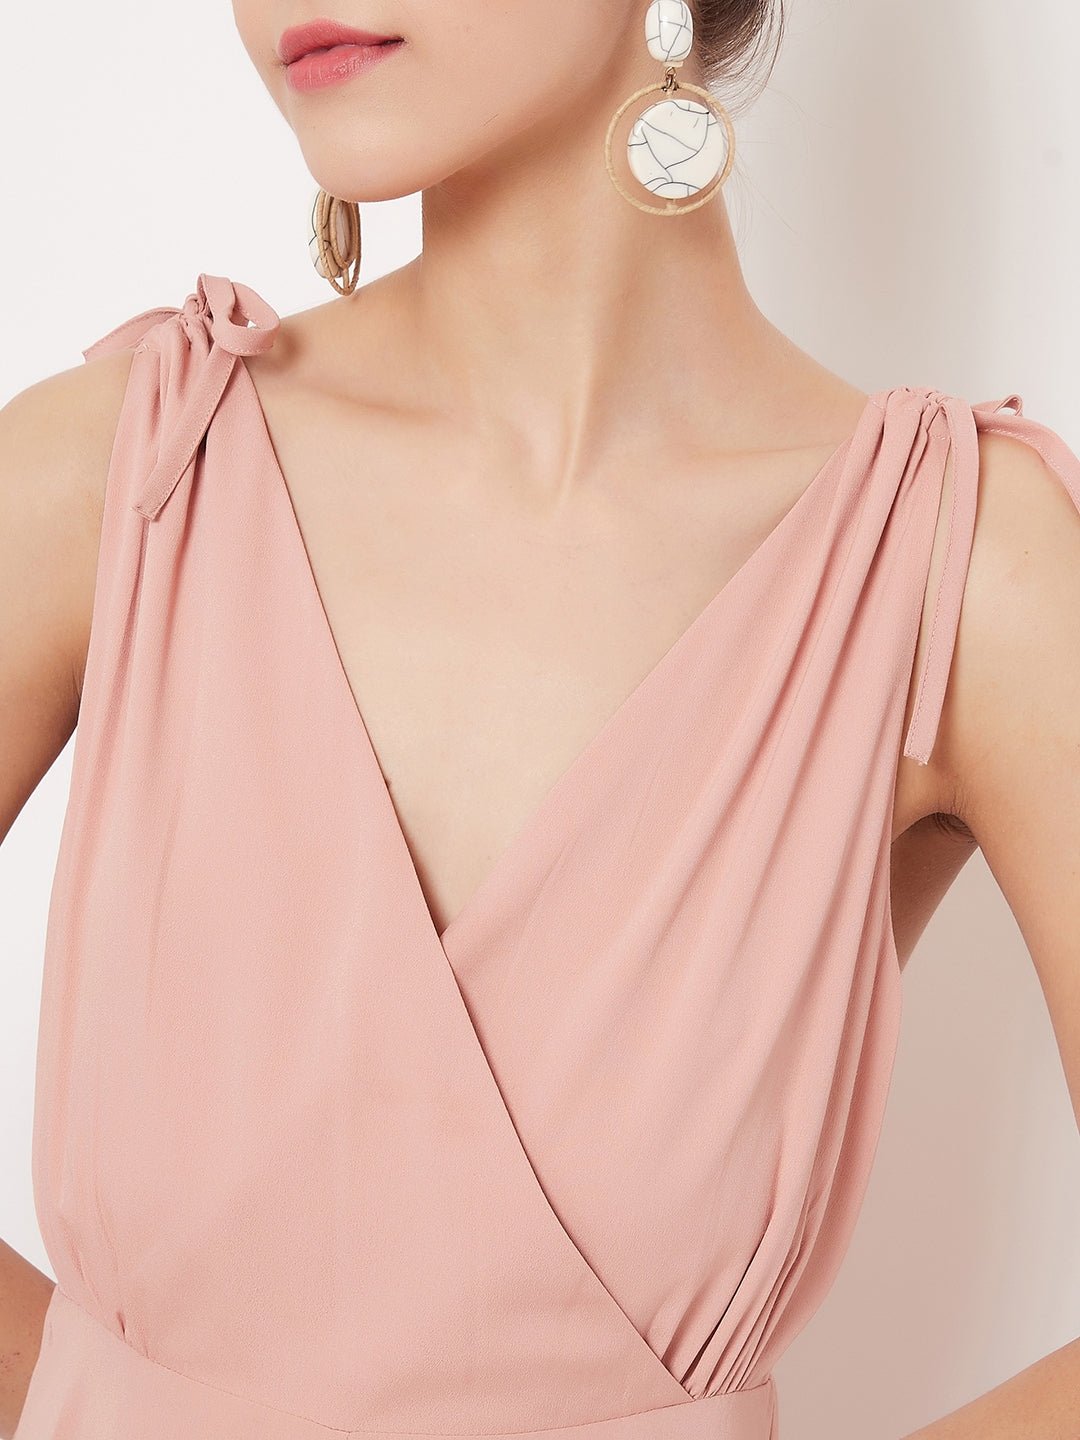 Folk Republic Women Solid Pink V-Neck Tie-Up Strap Low Back Flared Maxi Dress - #folk republic#